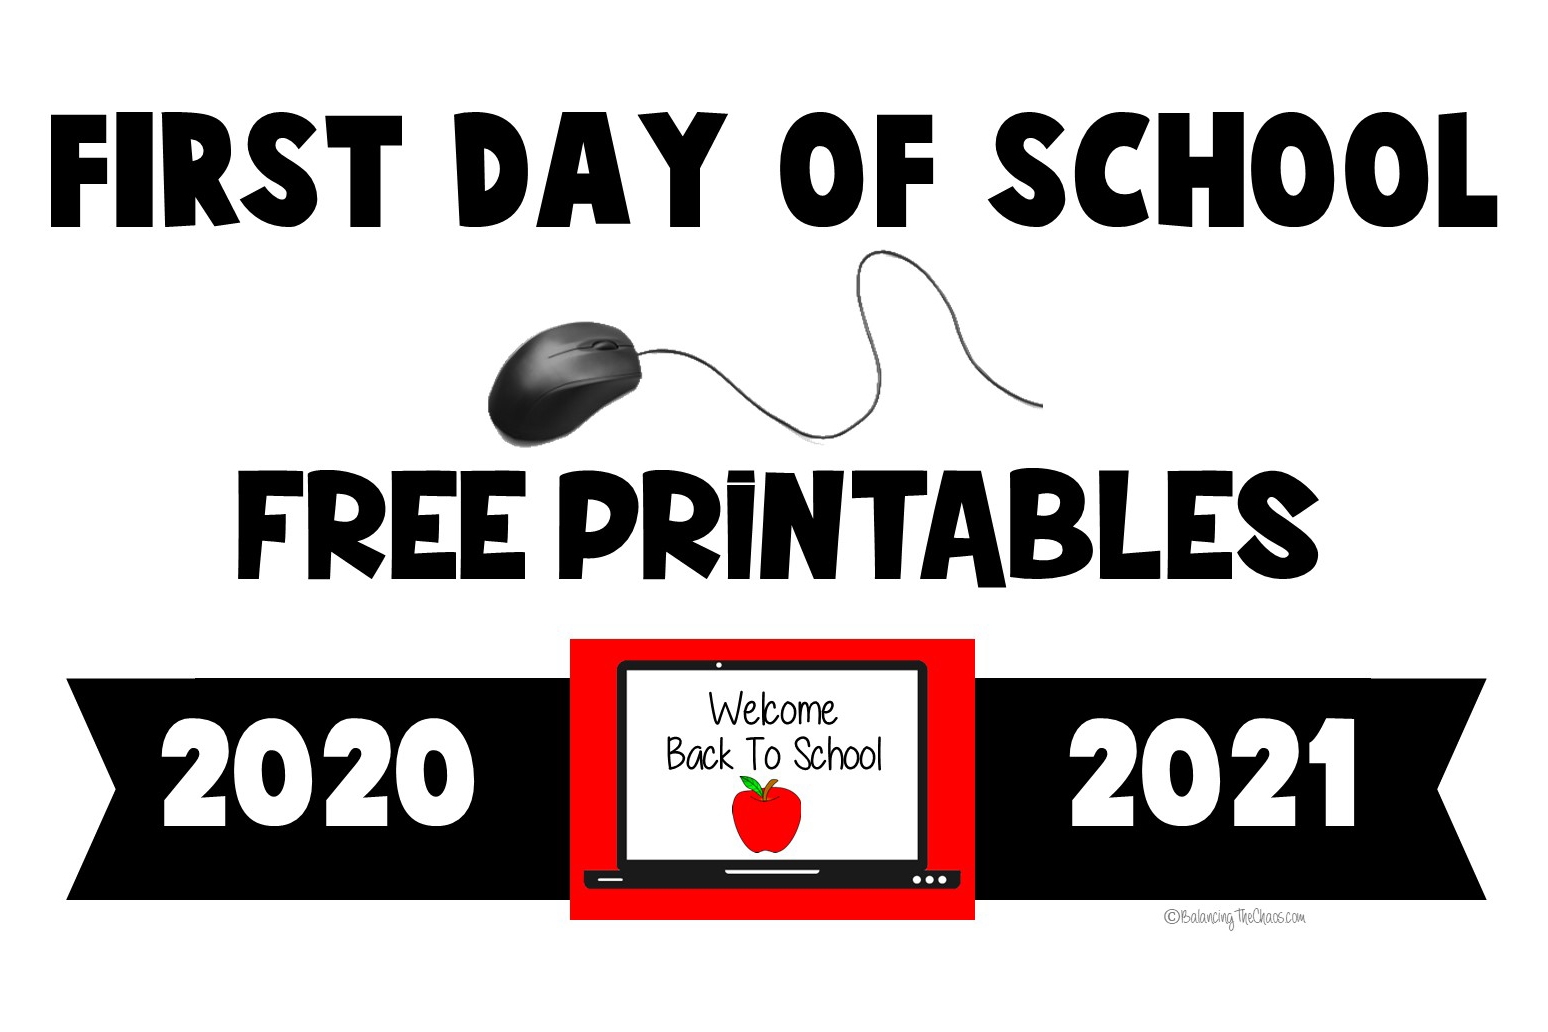 1st Day of School Free Printables 2020 - 2021 school year